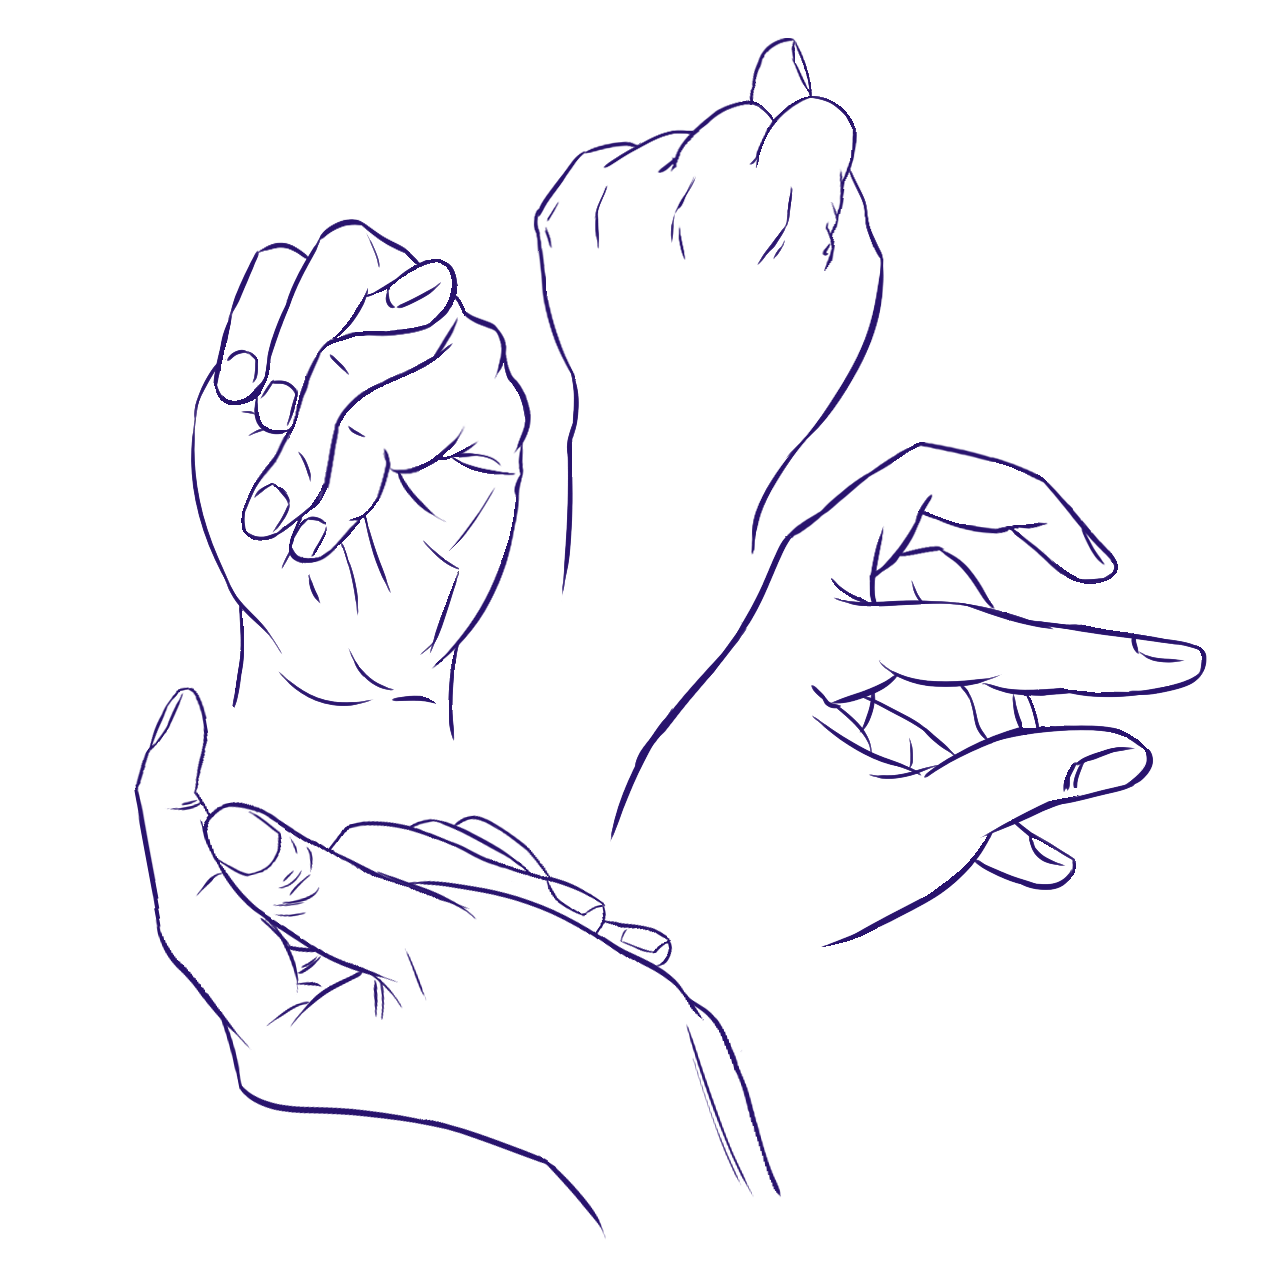 Hand Studies 3.png